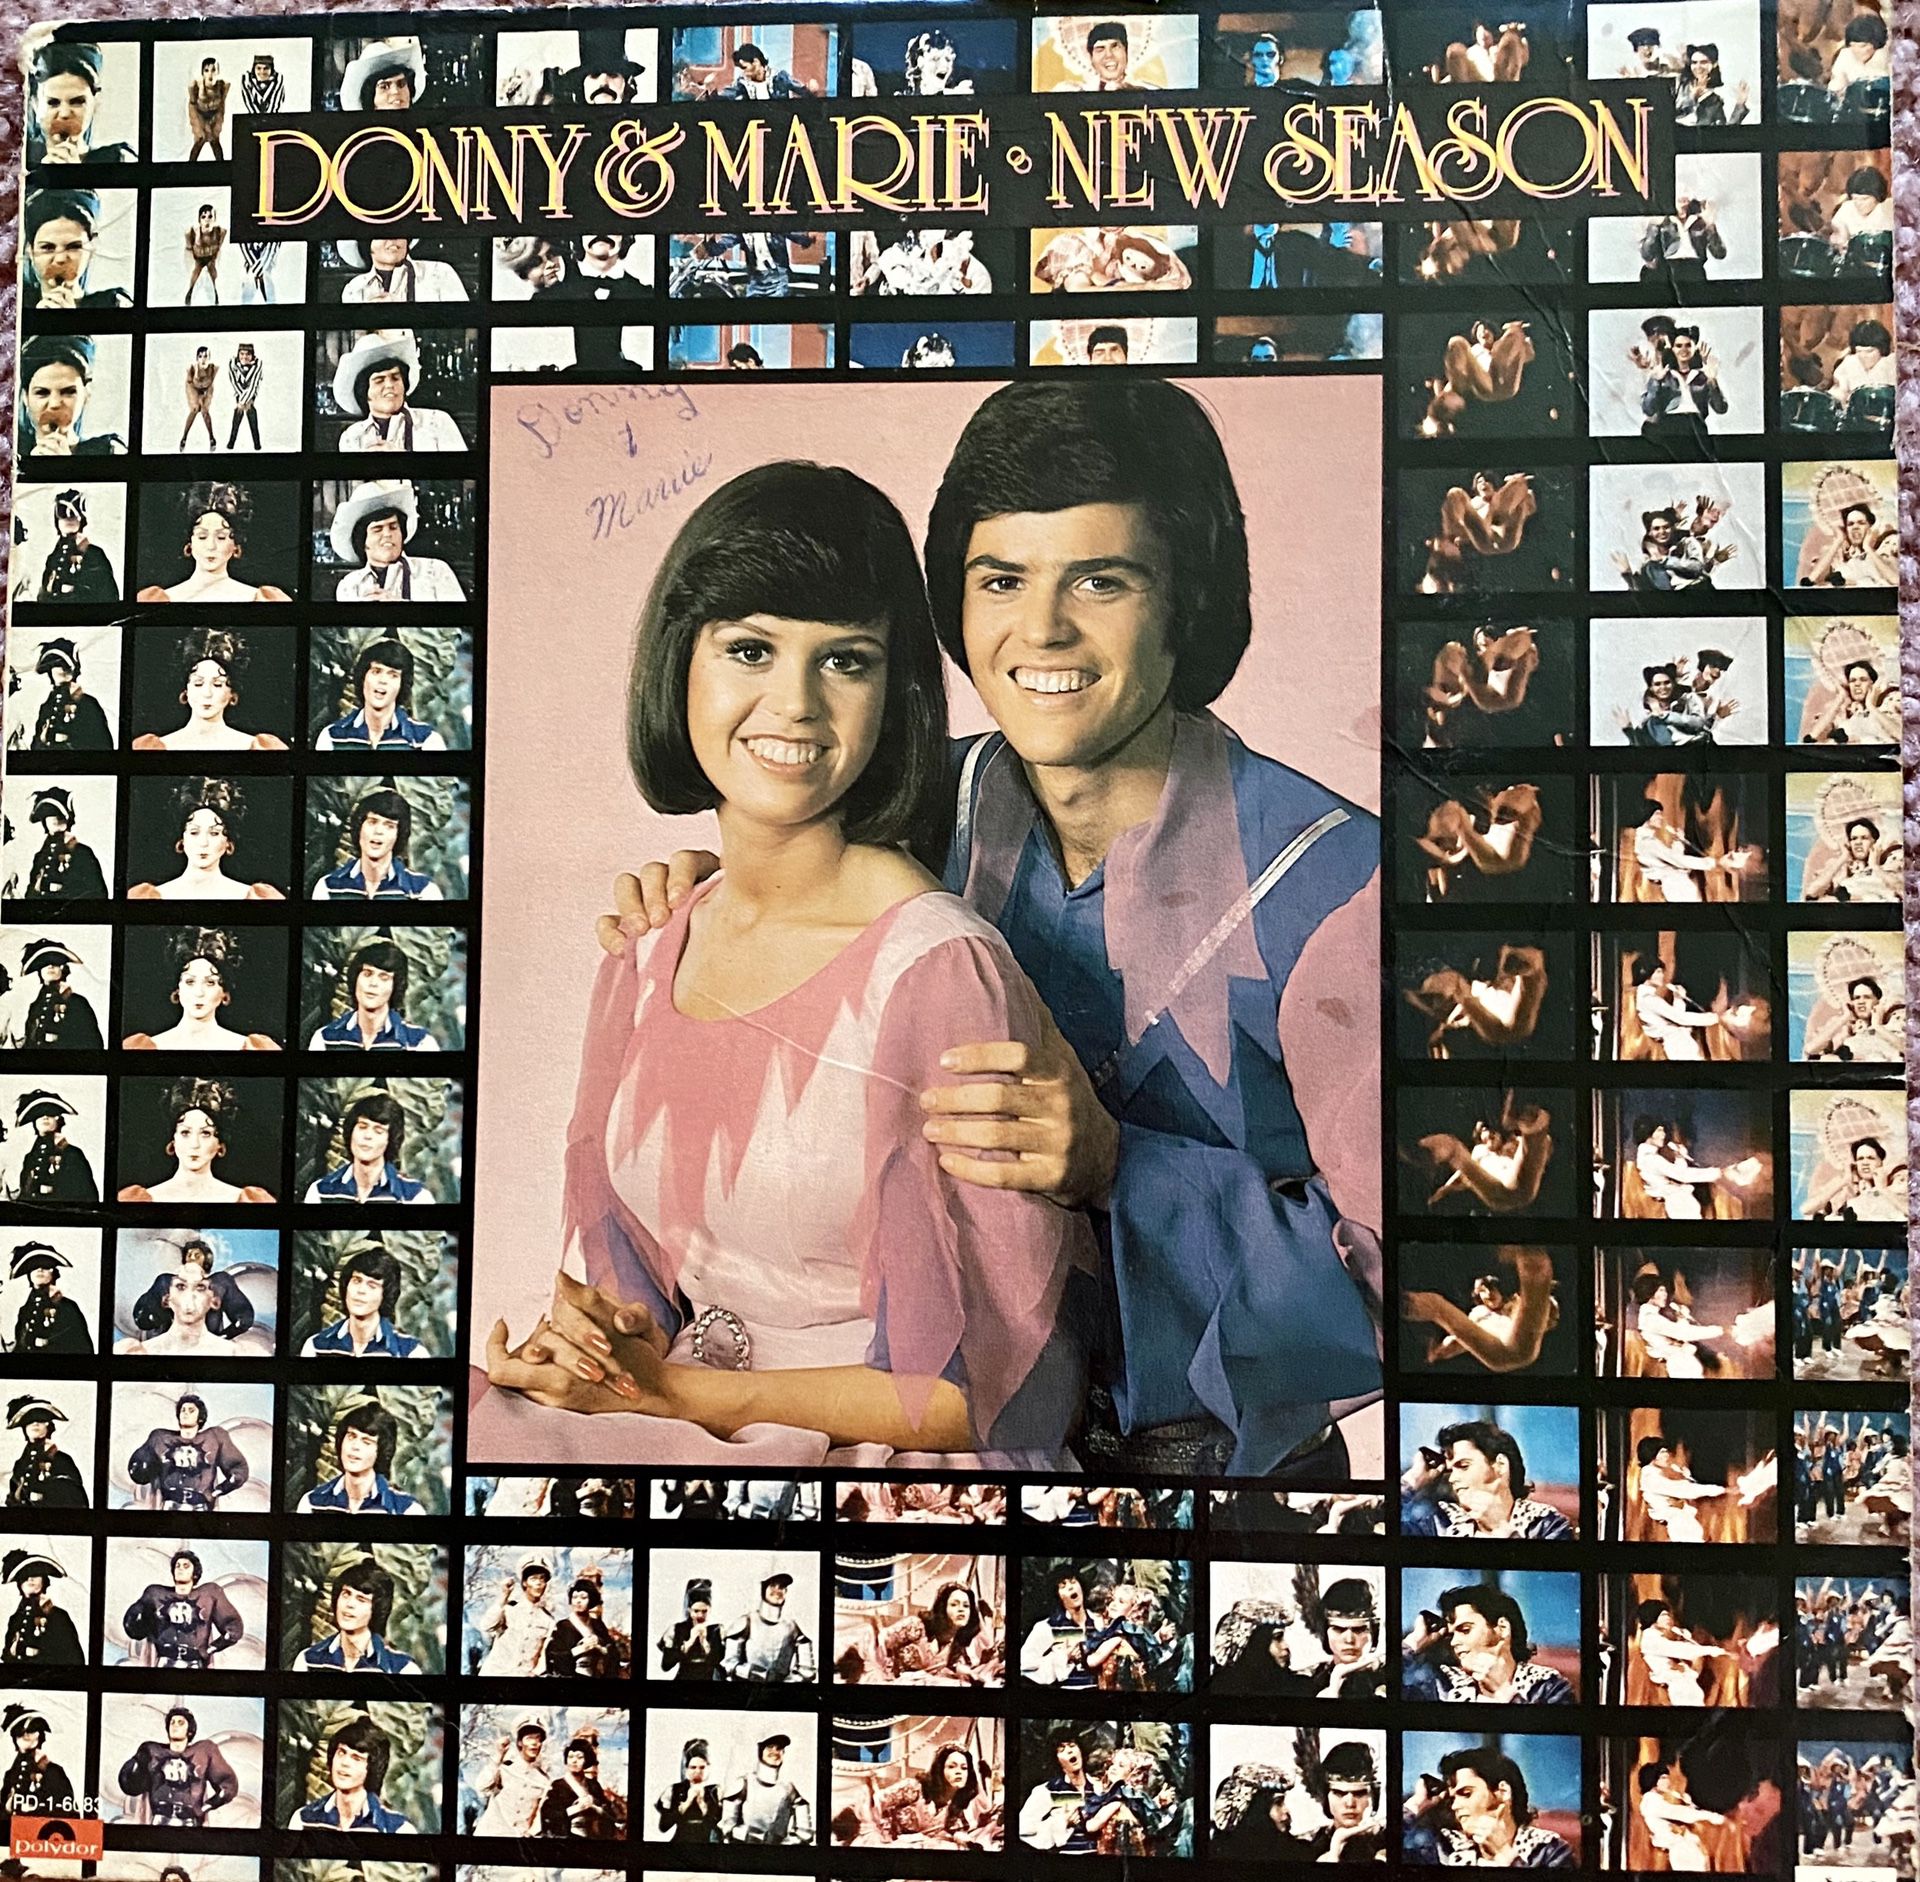 Donny & Marie “New Season” Vinyl Album $10